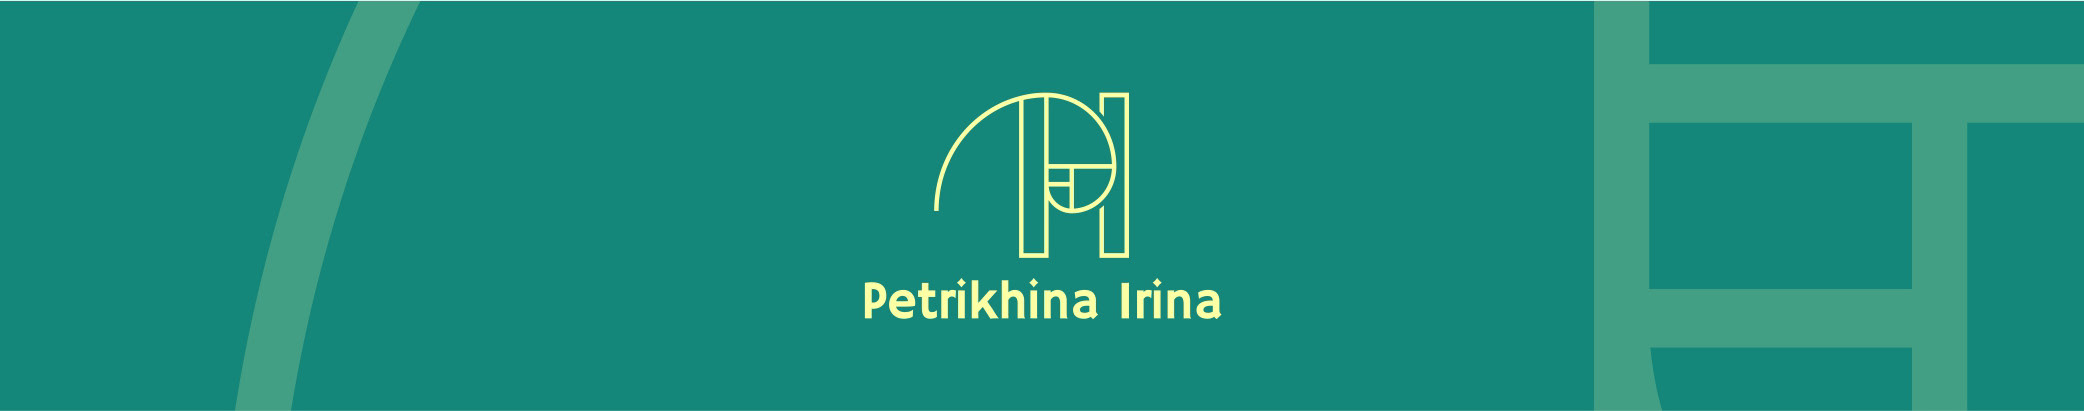 Irina Petrikhina のプロファイルバナー